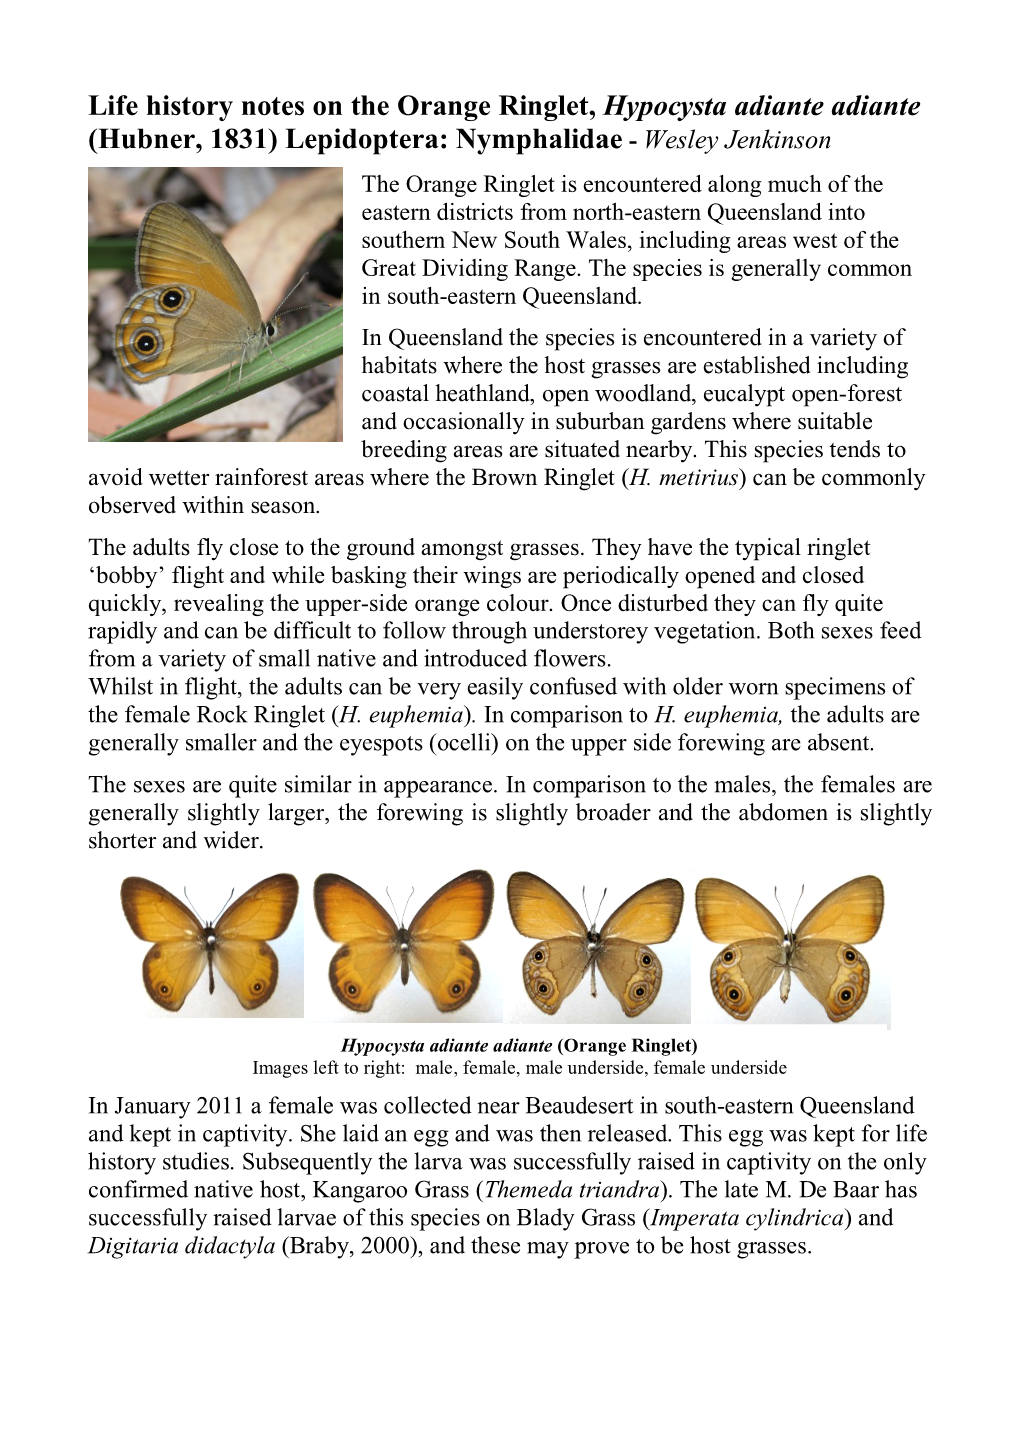 Life History Notes on the Orange Ringlet, Hypocysta Adiante Adiante (Hubner, 1831) Lepidoptera: Nymphalidae - Wesley Jenkinson